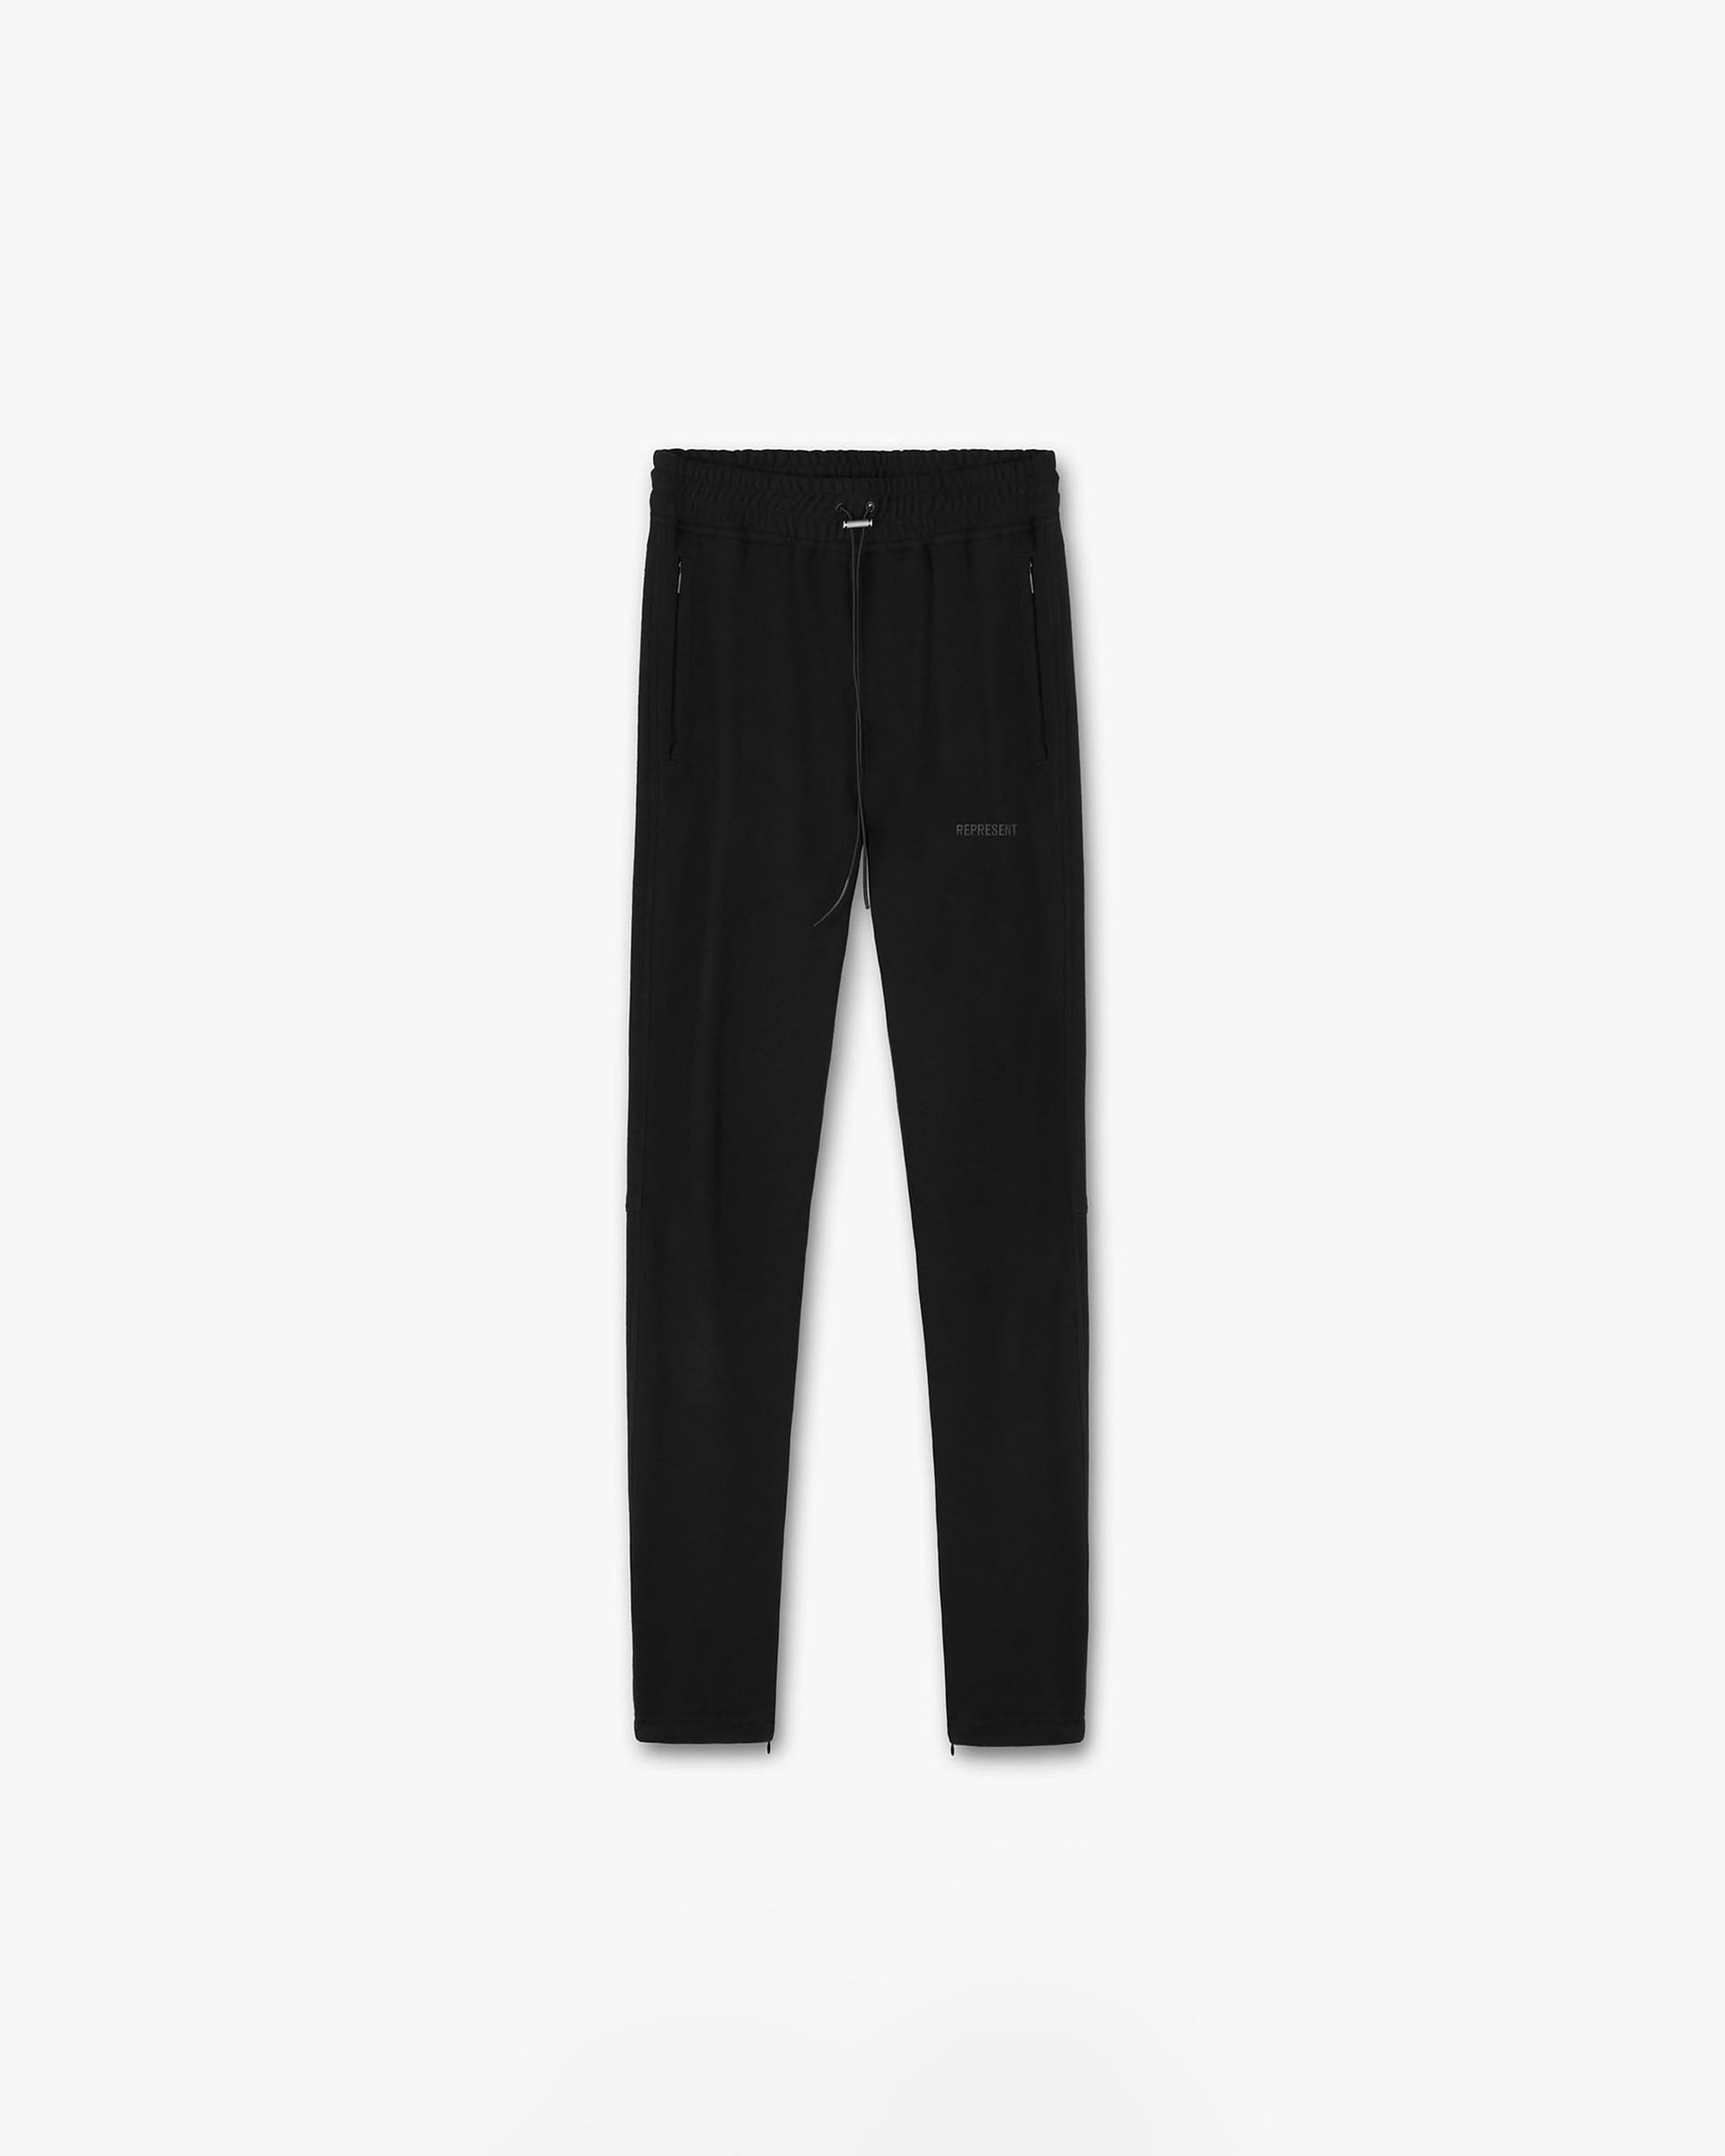 Blank Zip Sweatpant - All Black